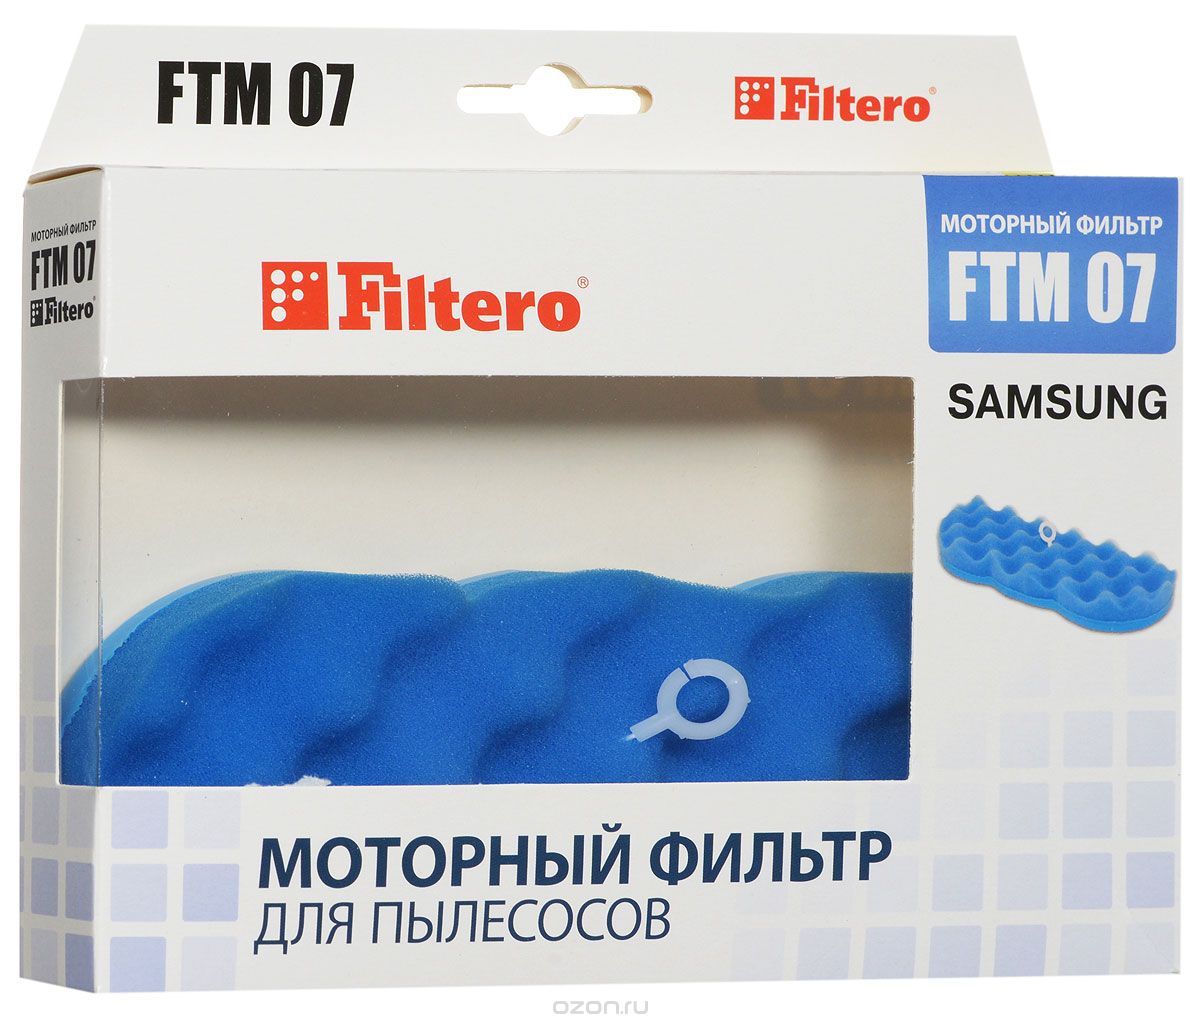 Filtero FTM 07 SAM     Samsung